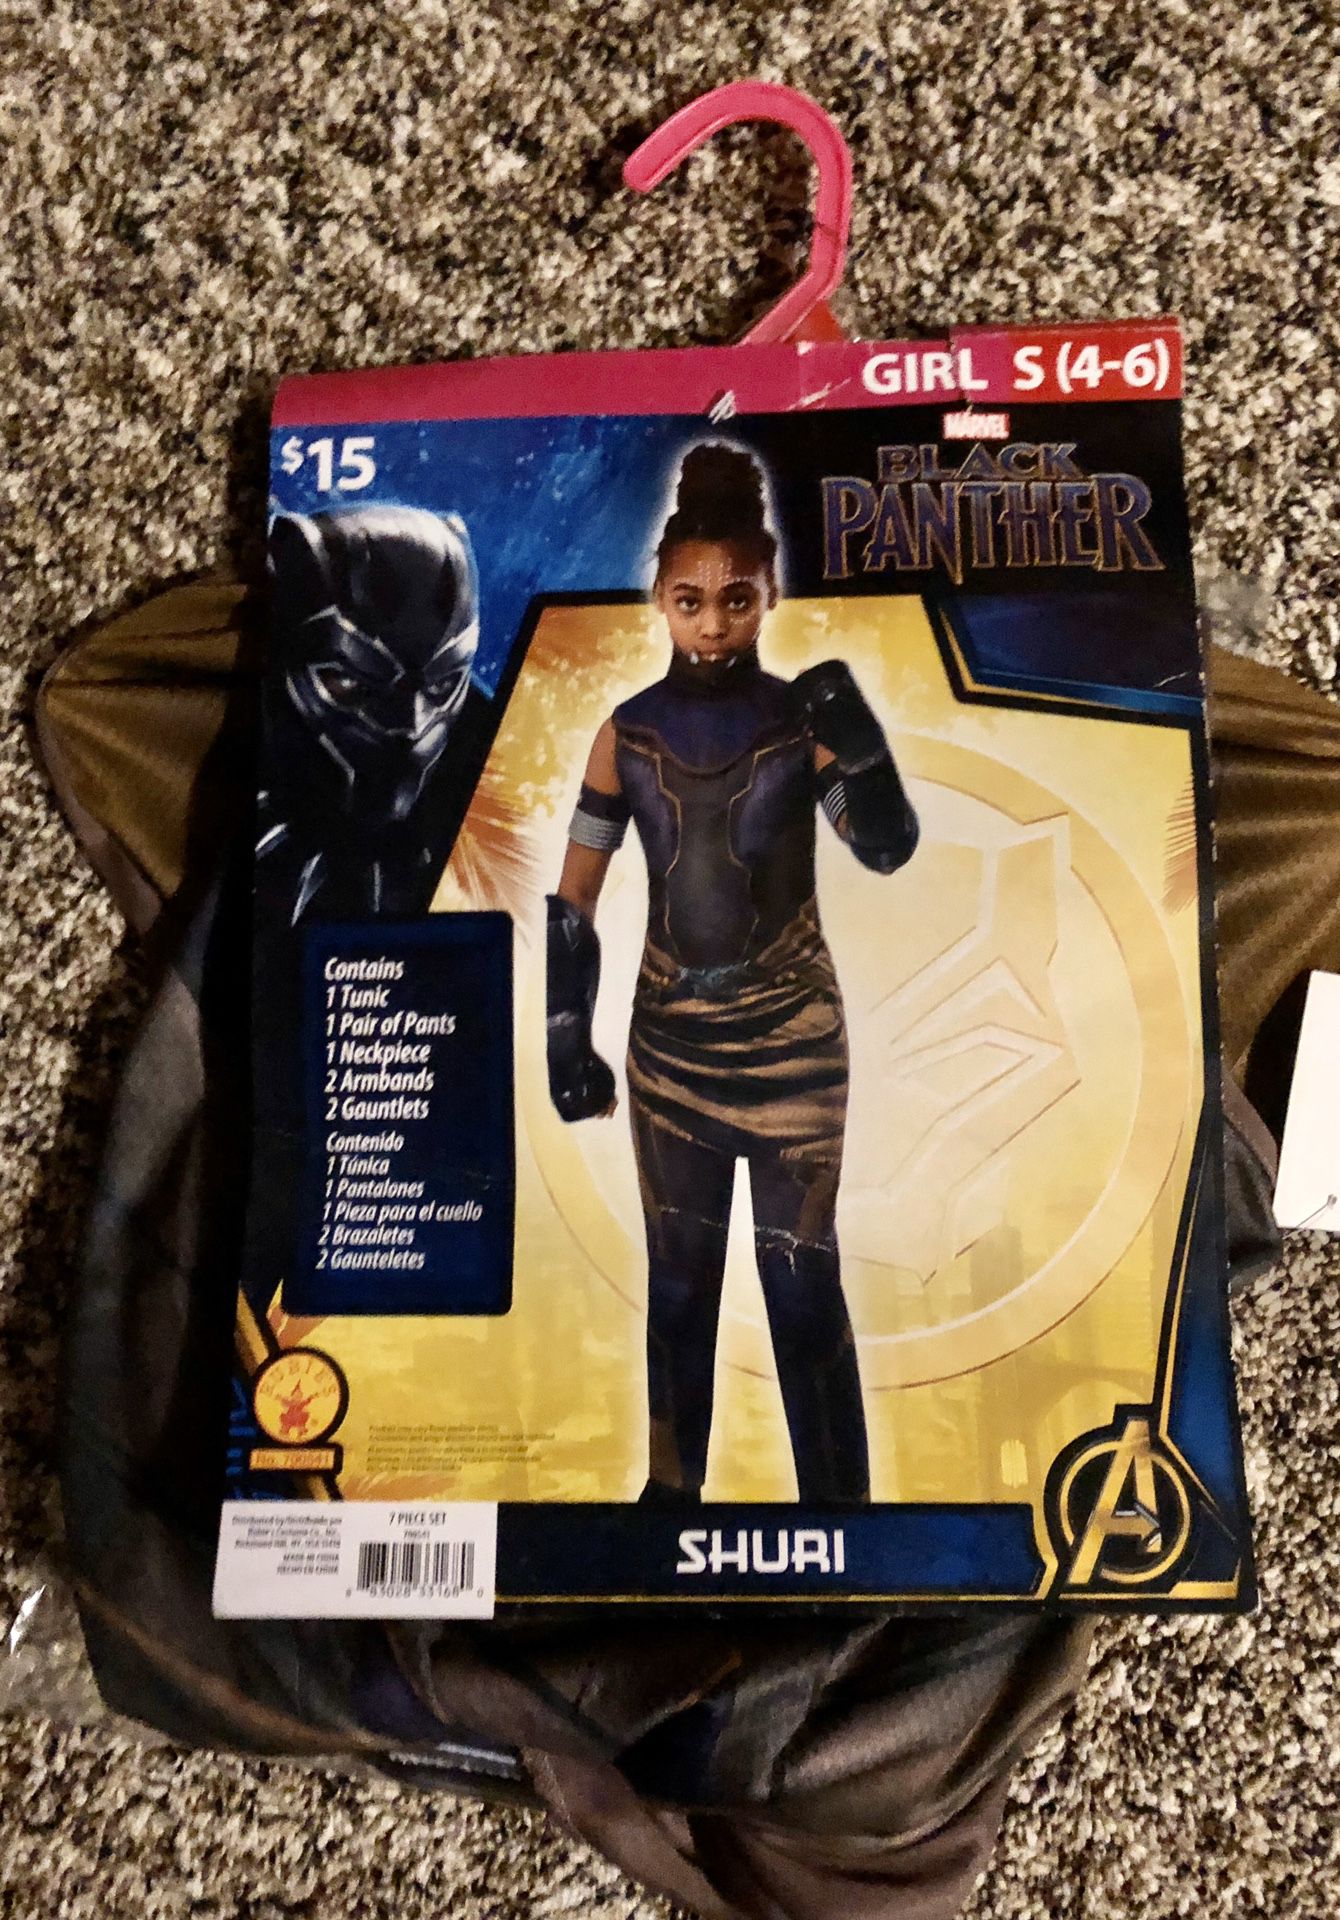 Girls S (4-6) Halloween Costume -Black Panther (Marvel)